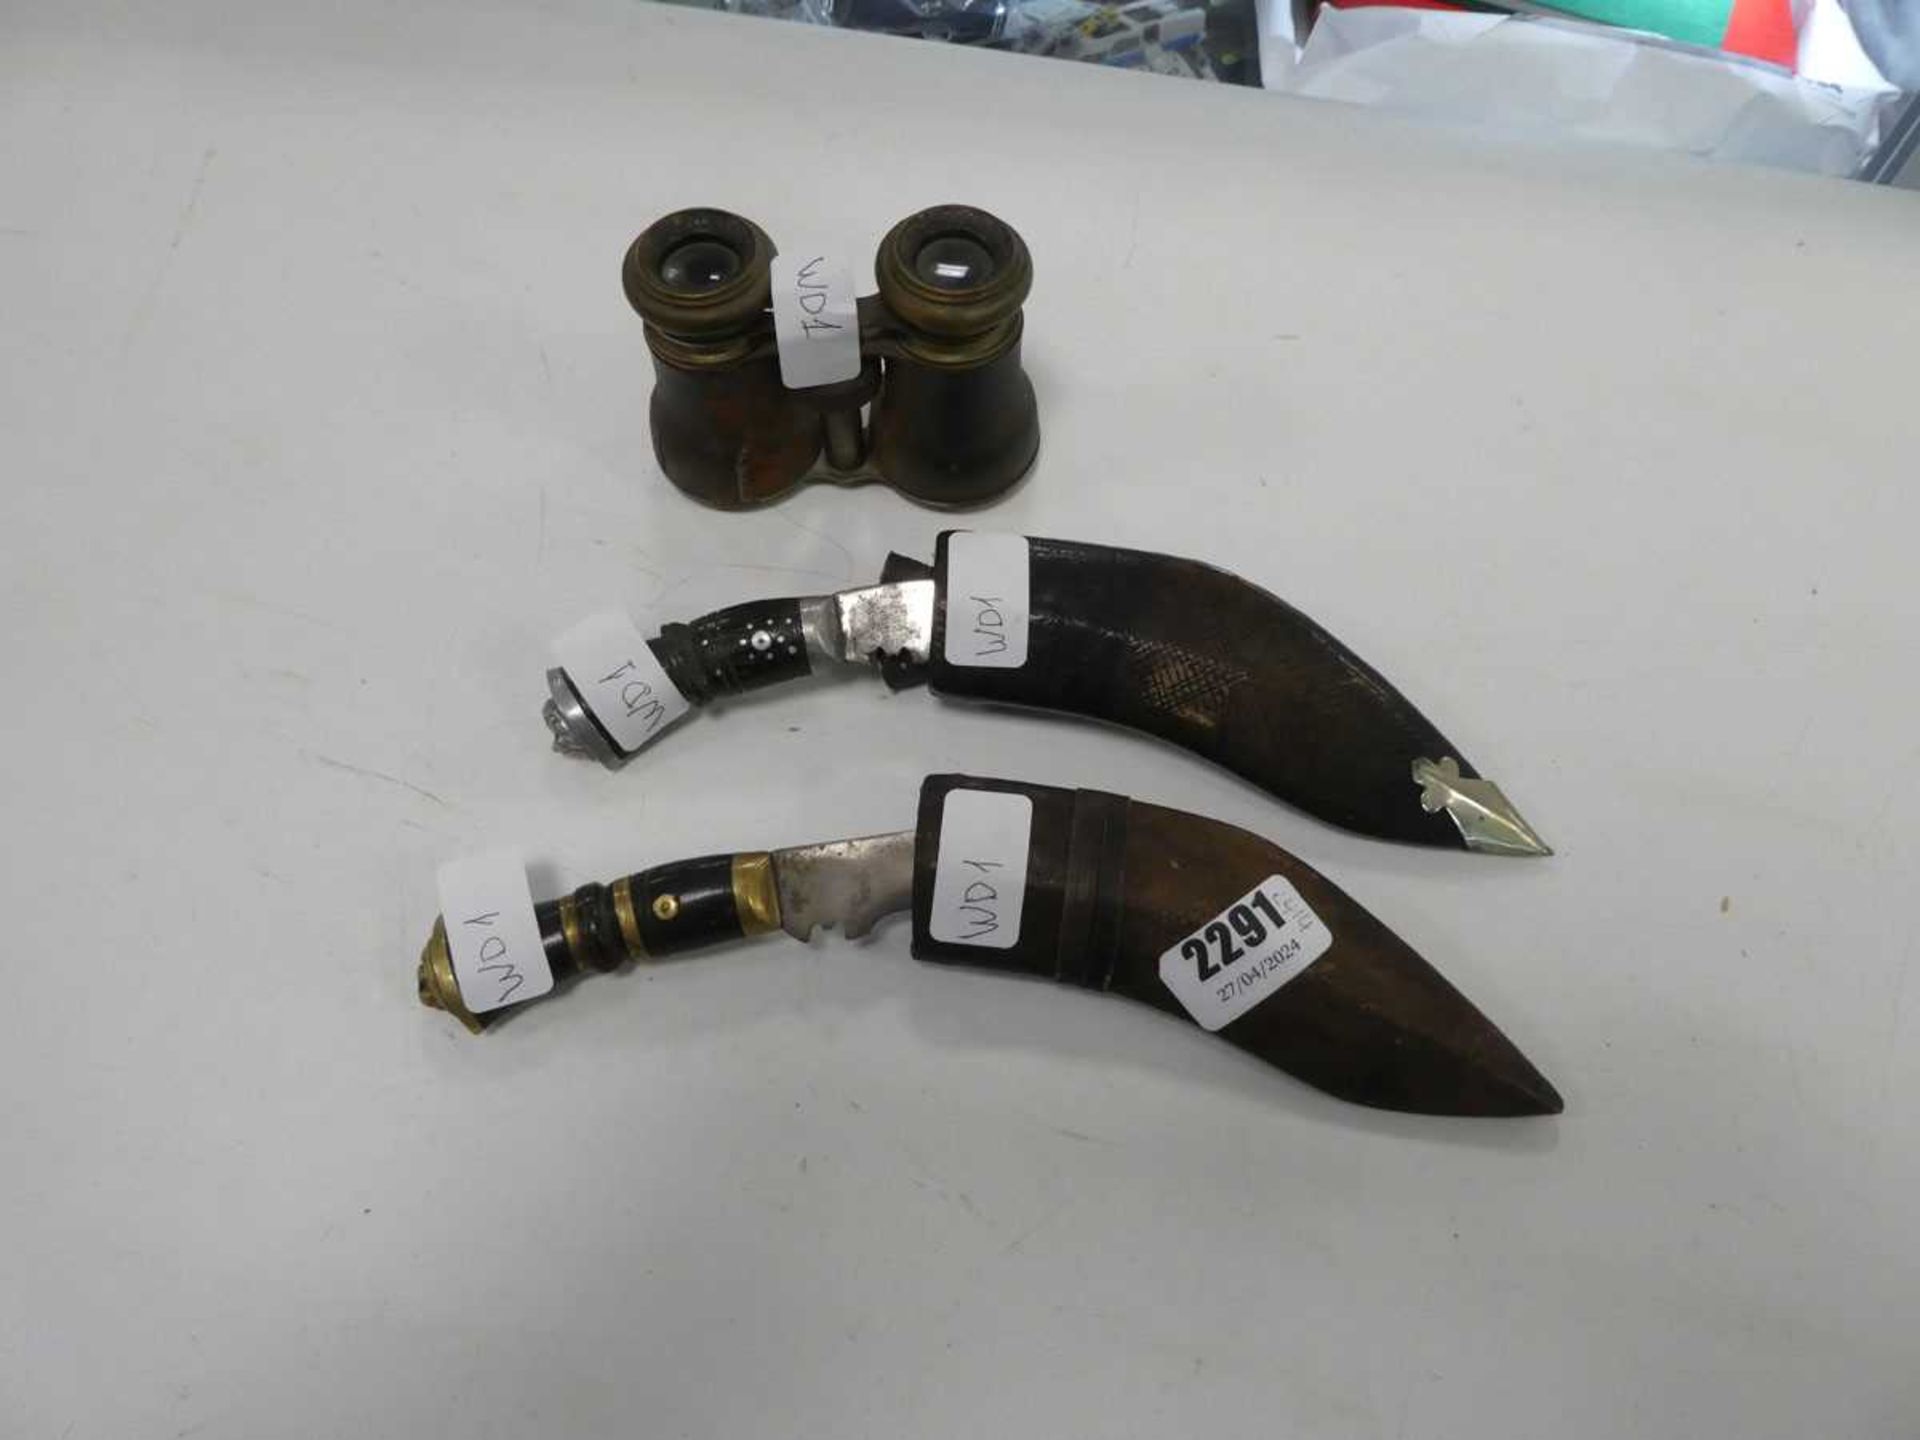 2 Gurkha kukris in sheaths with 2 smaller kakola knives, plus a antique brass binoculars